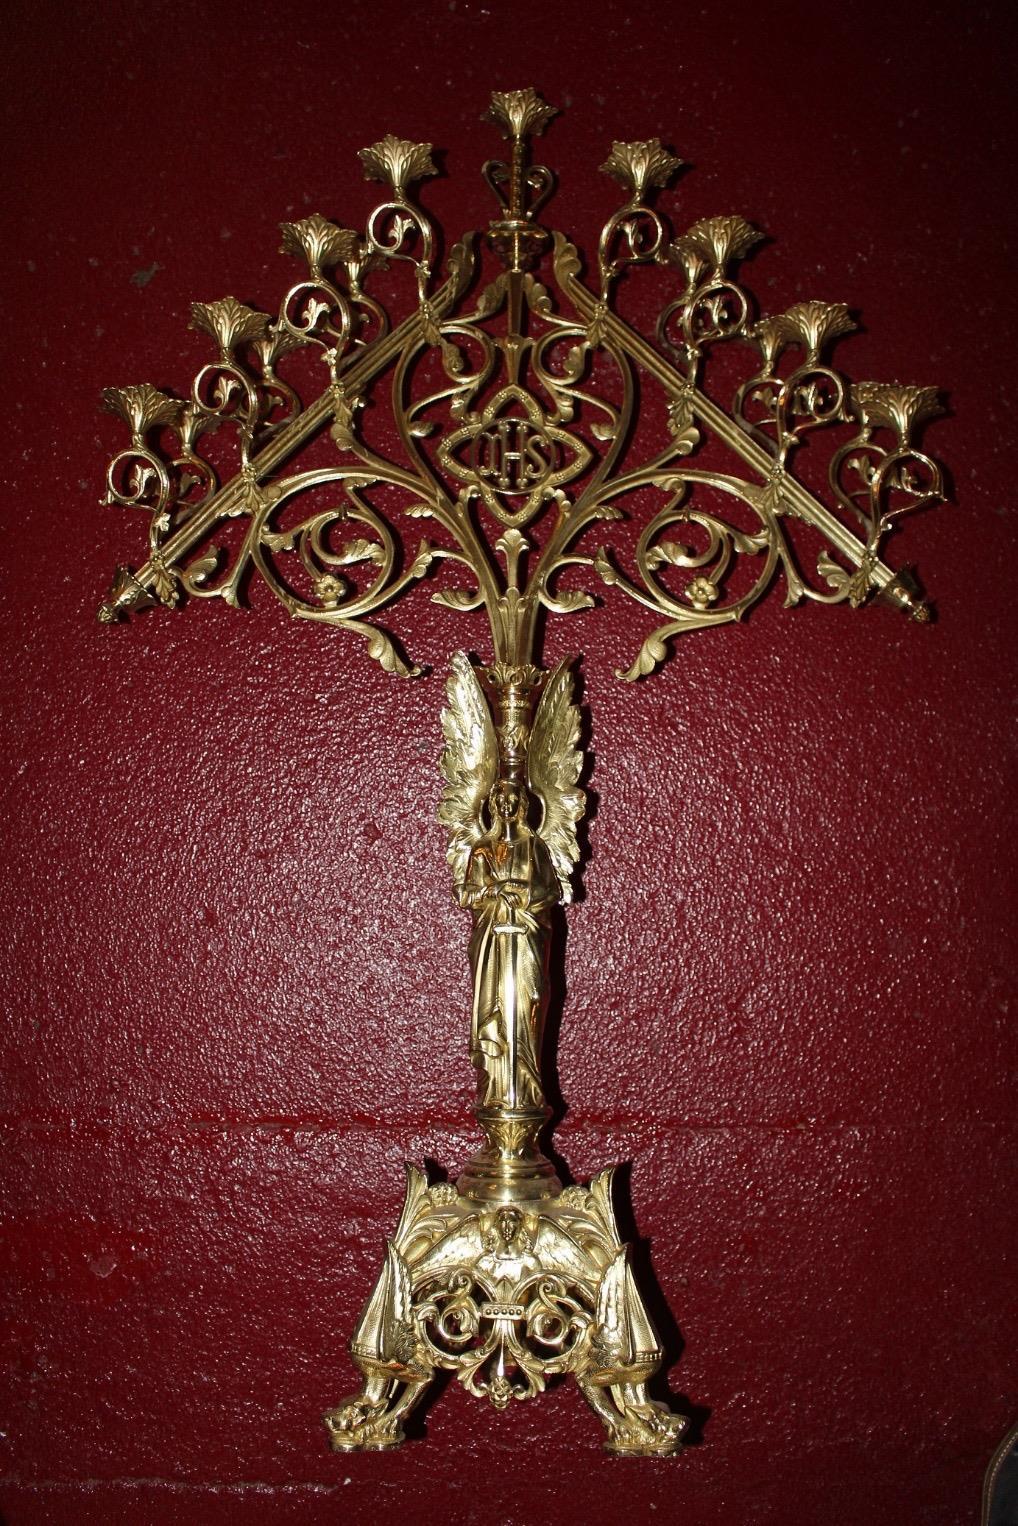 Tenebrae Stand Antique brass candelabra used